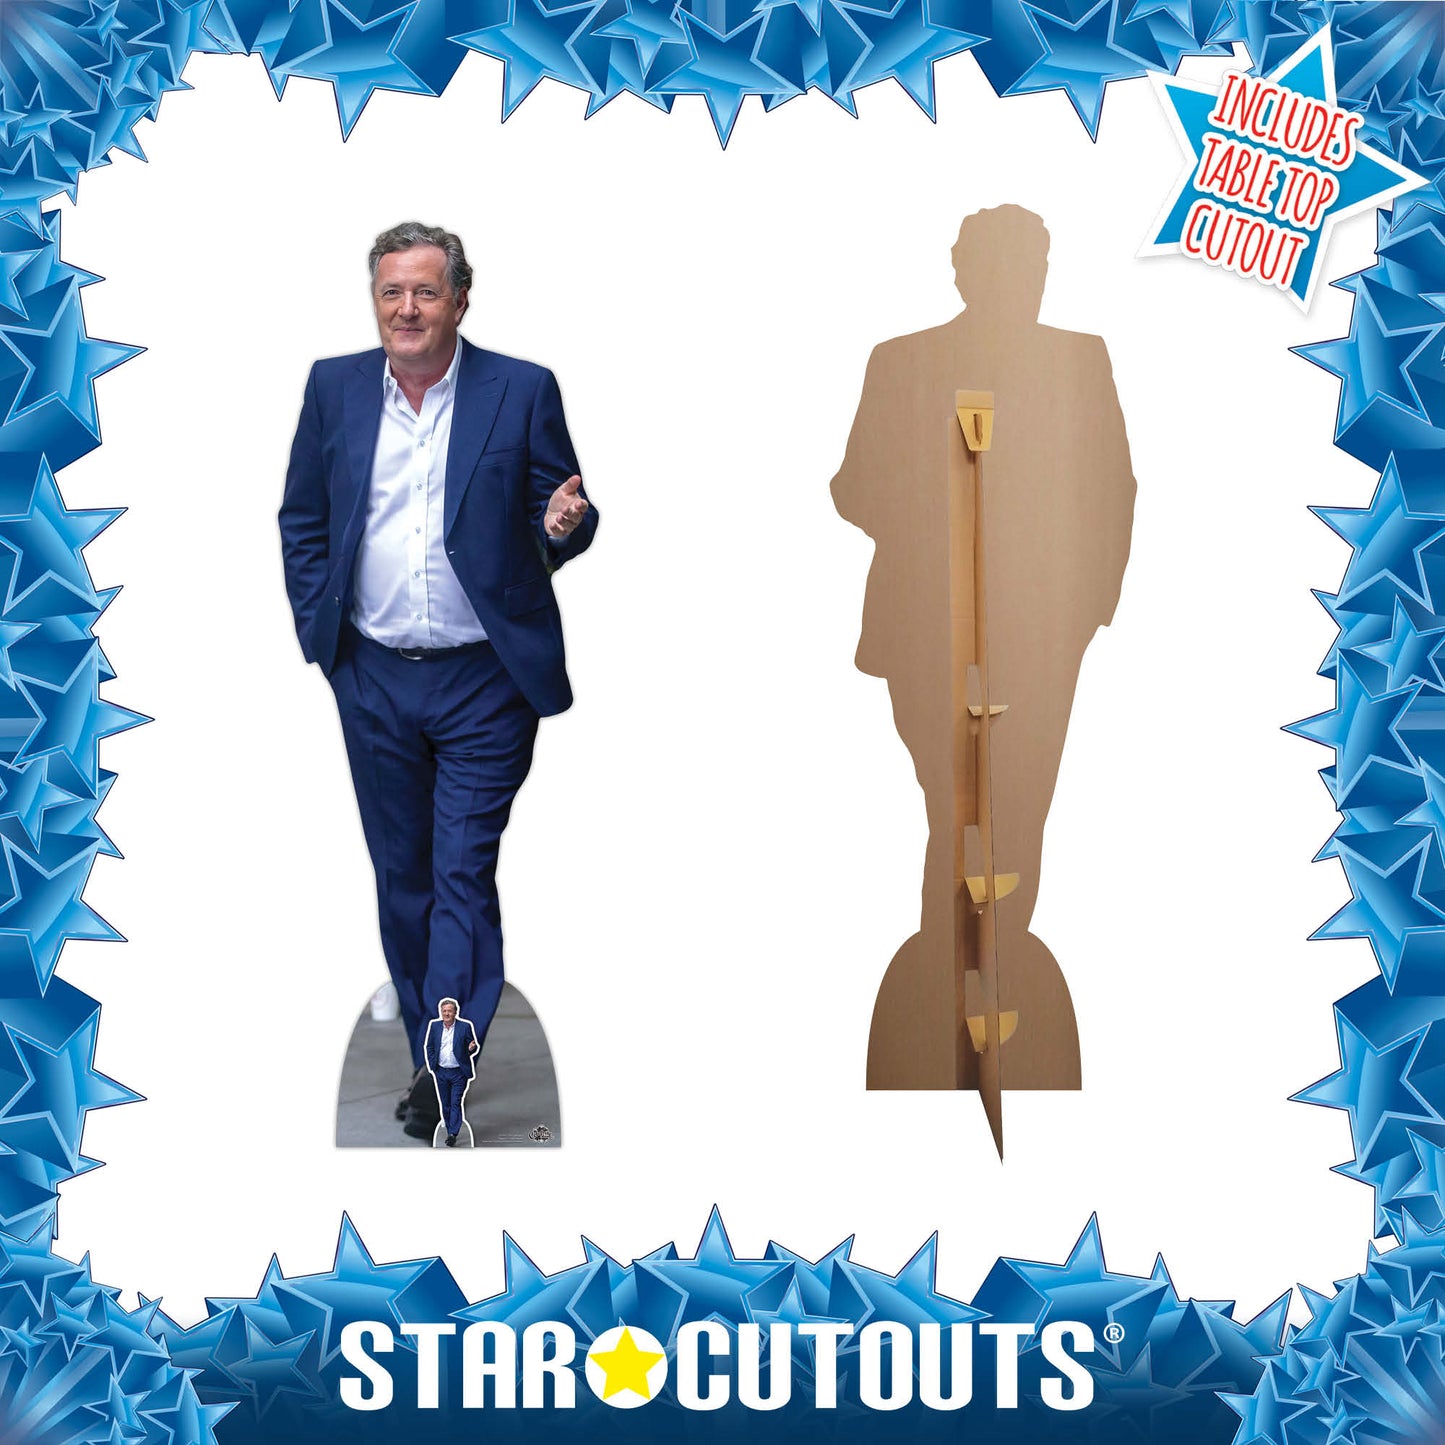 Piers Morgan Cardboard Cutout